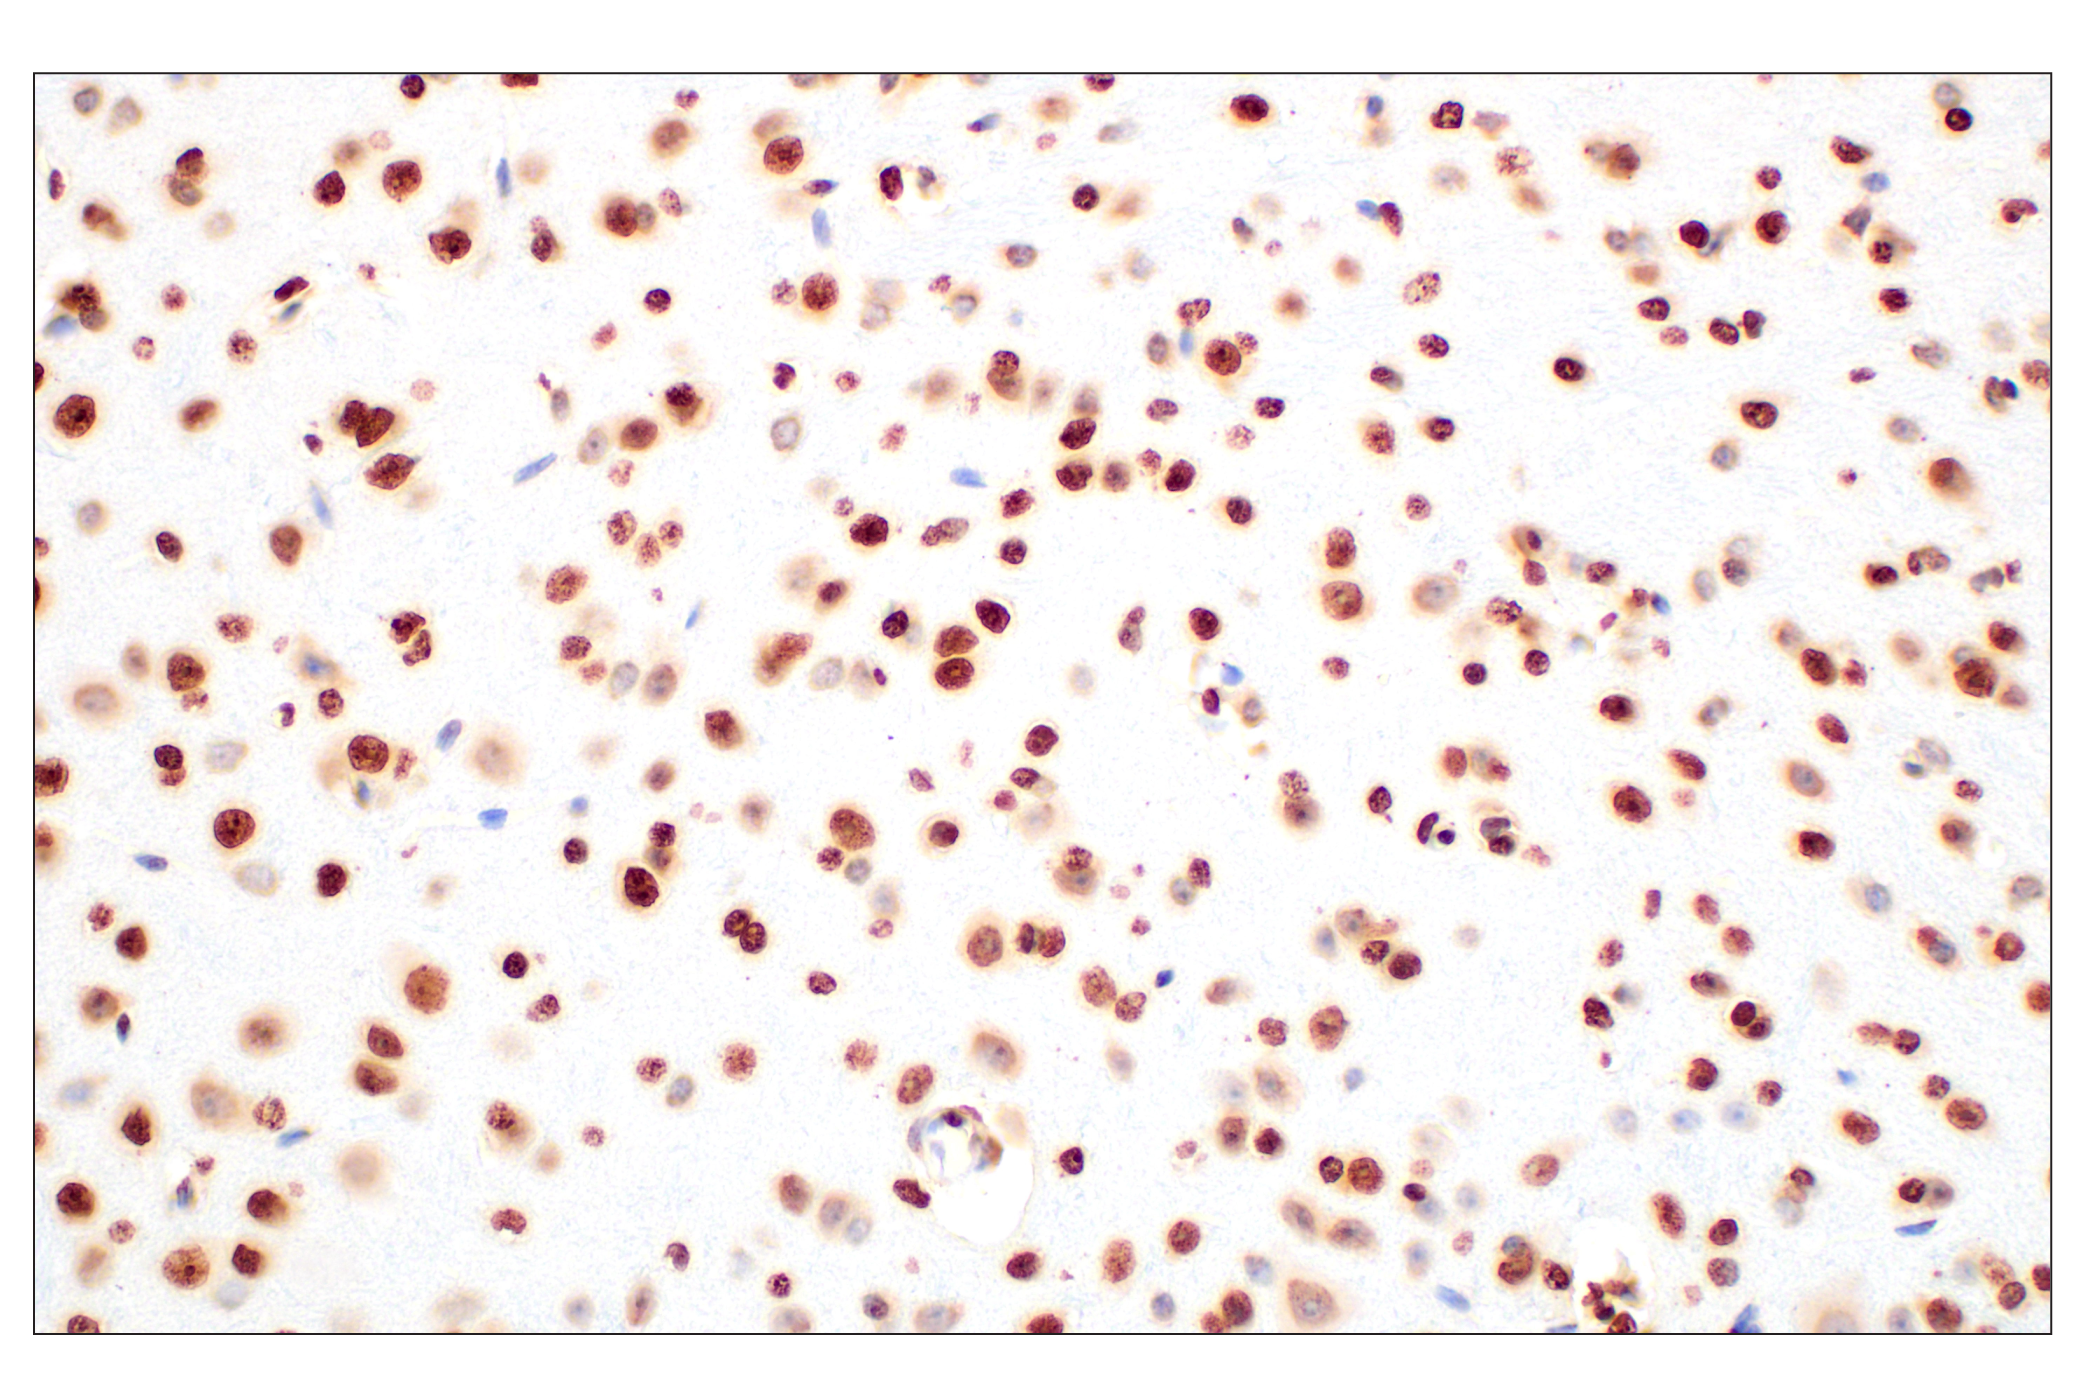  Image 30: Acetyl-Histone H3 Antibody Sampler Kit